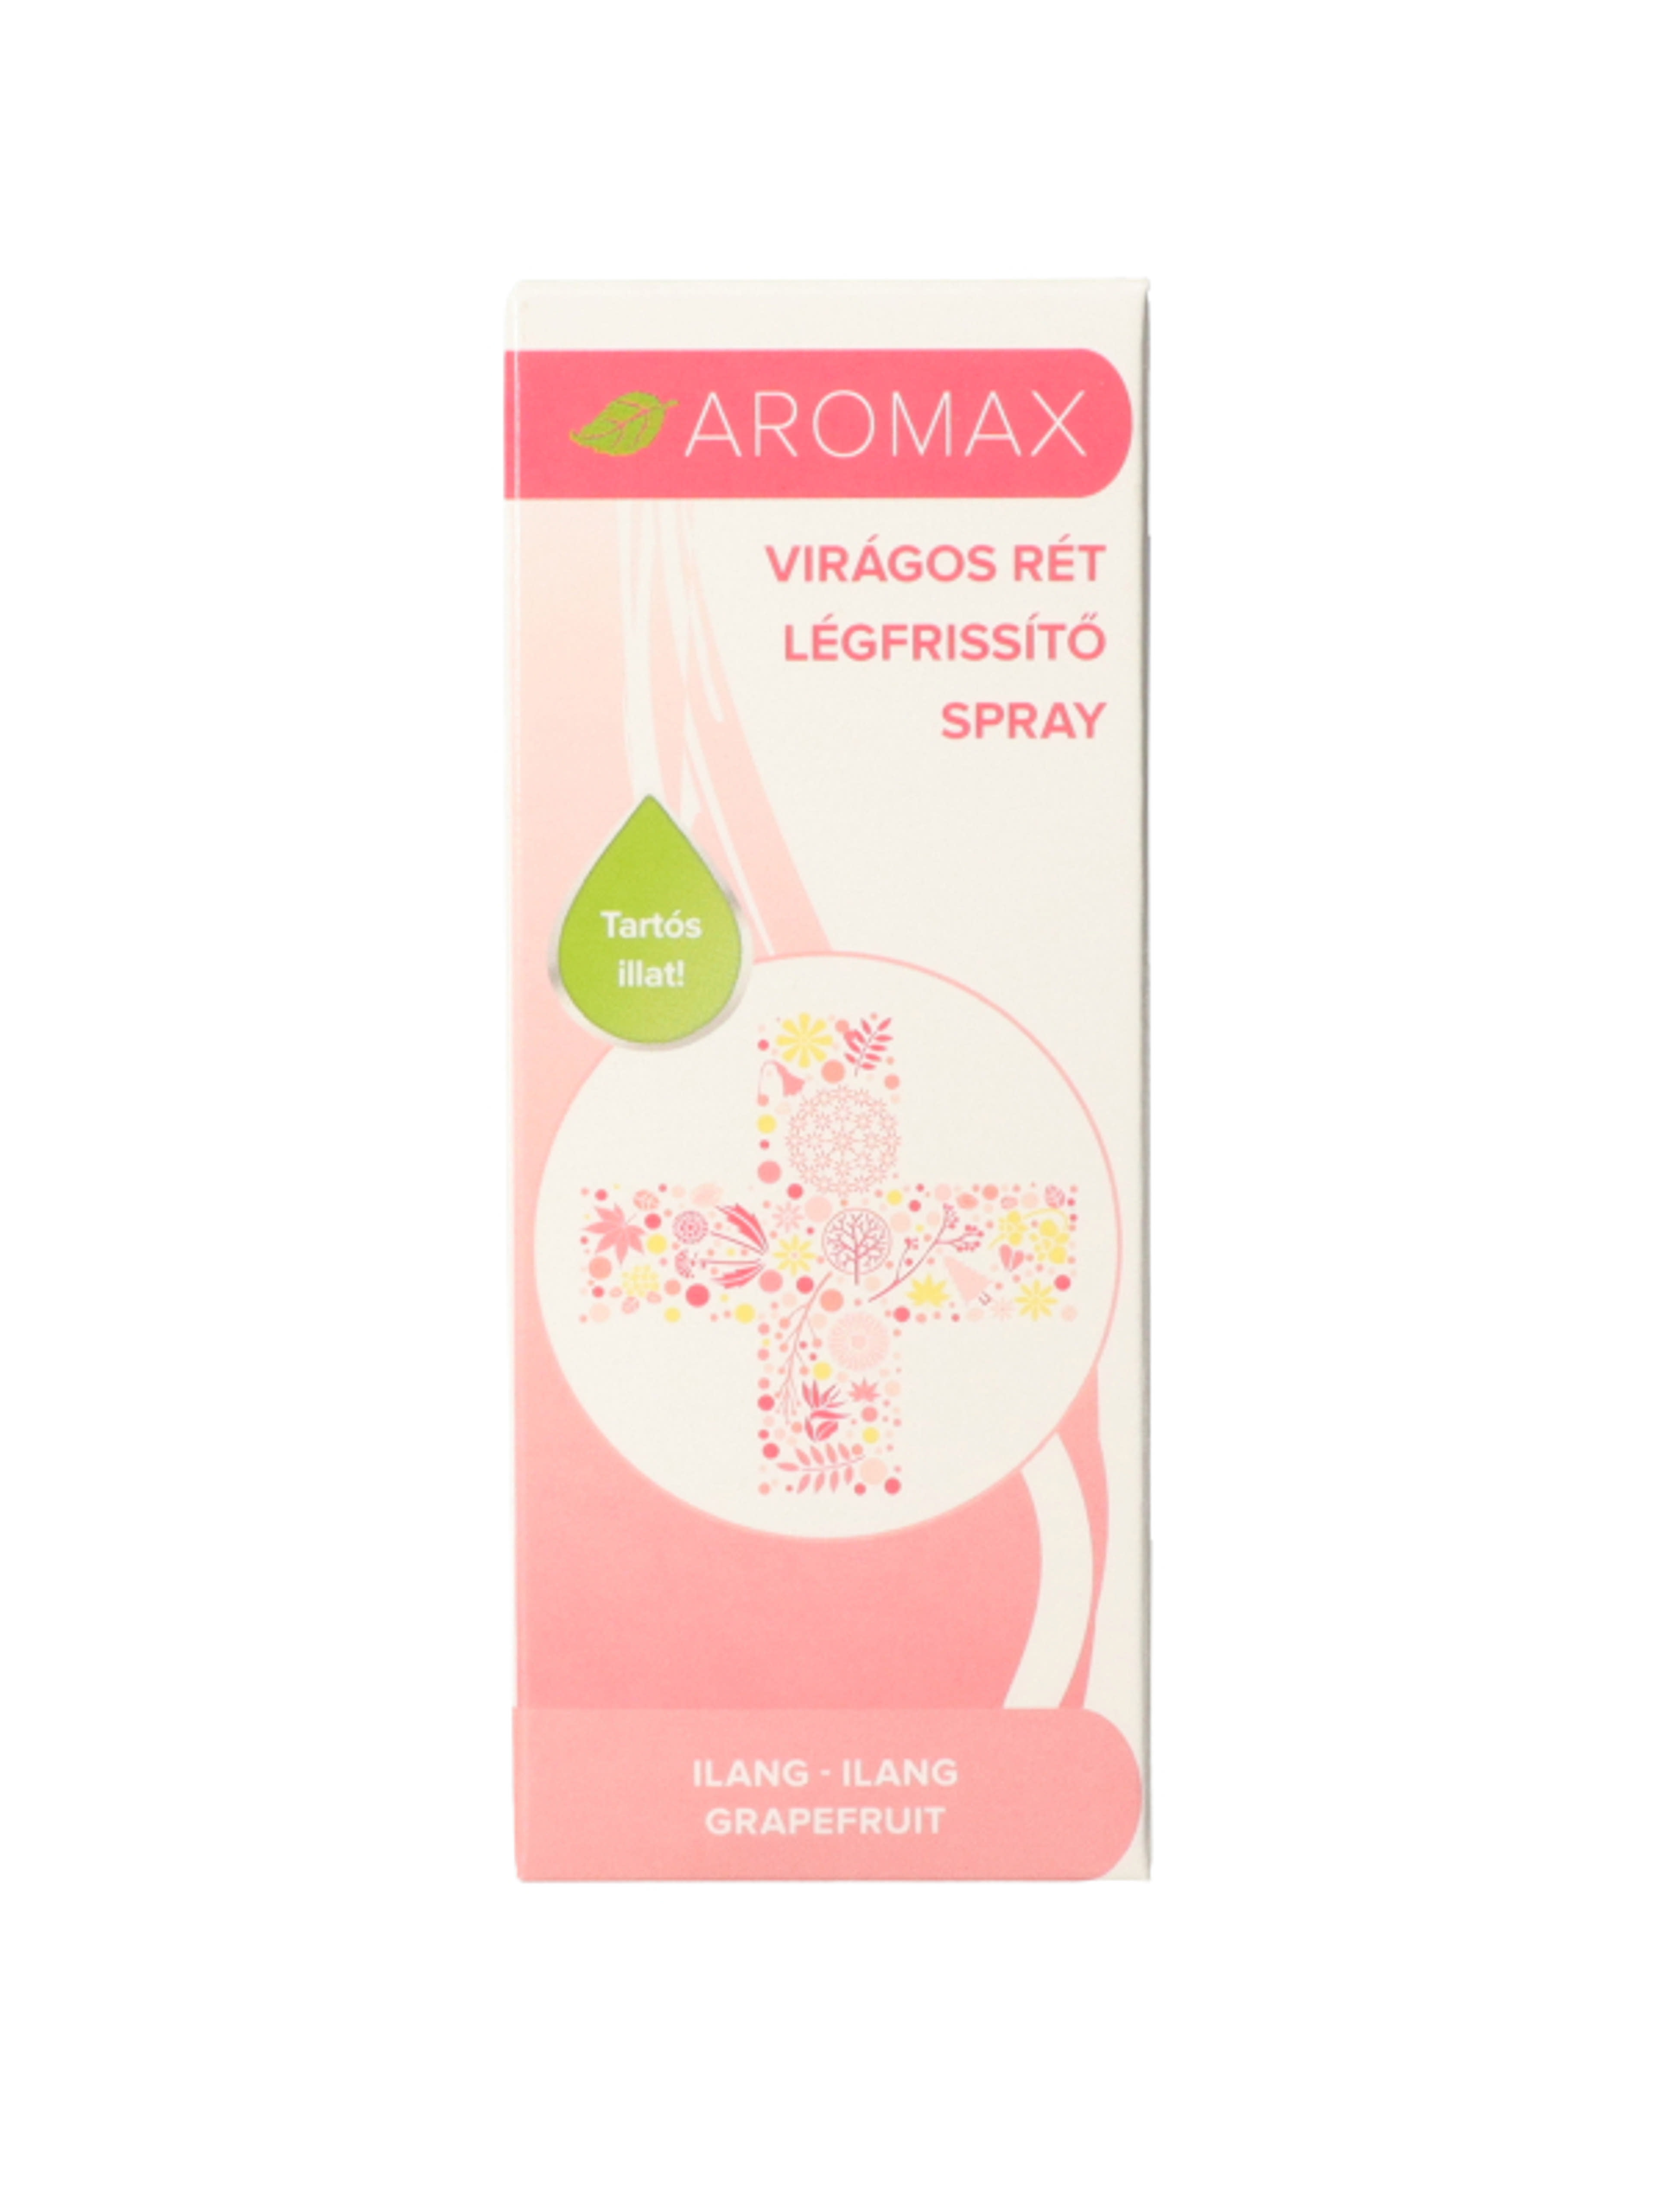 Aromax légfrissítő spray virágos rét - 20 ml-1